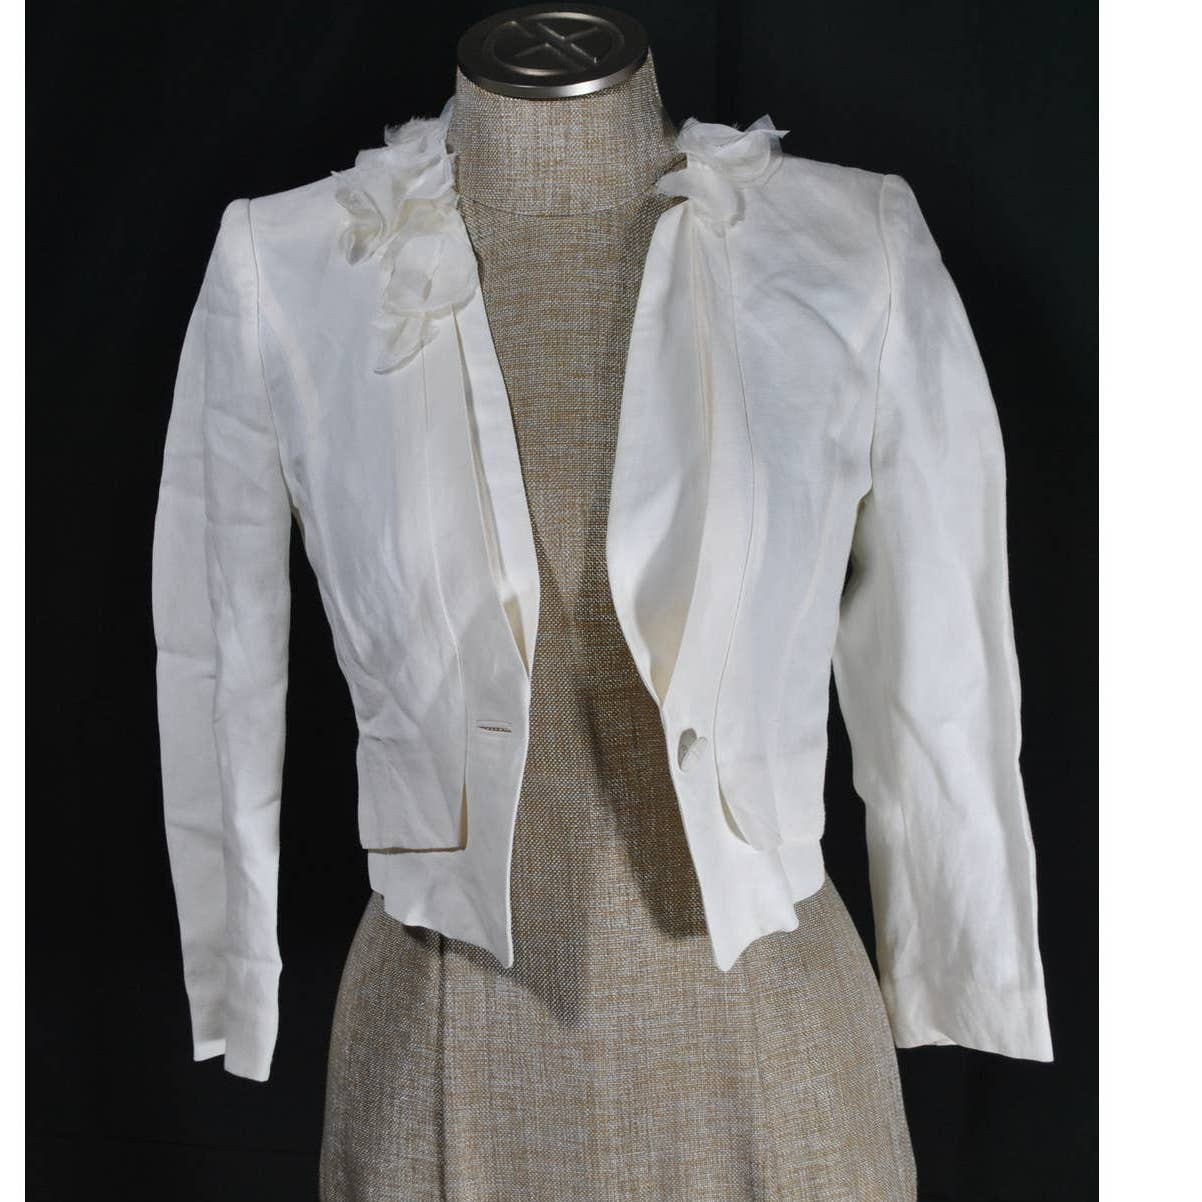 Jill Stuart White Cropped Linen Jacket - S